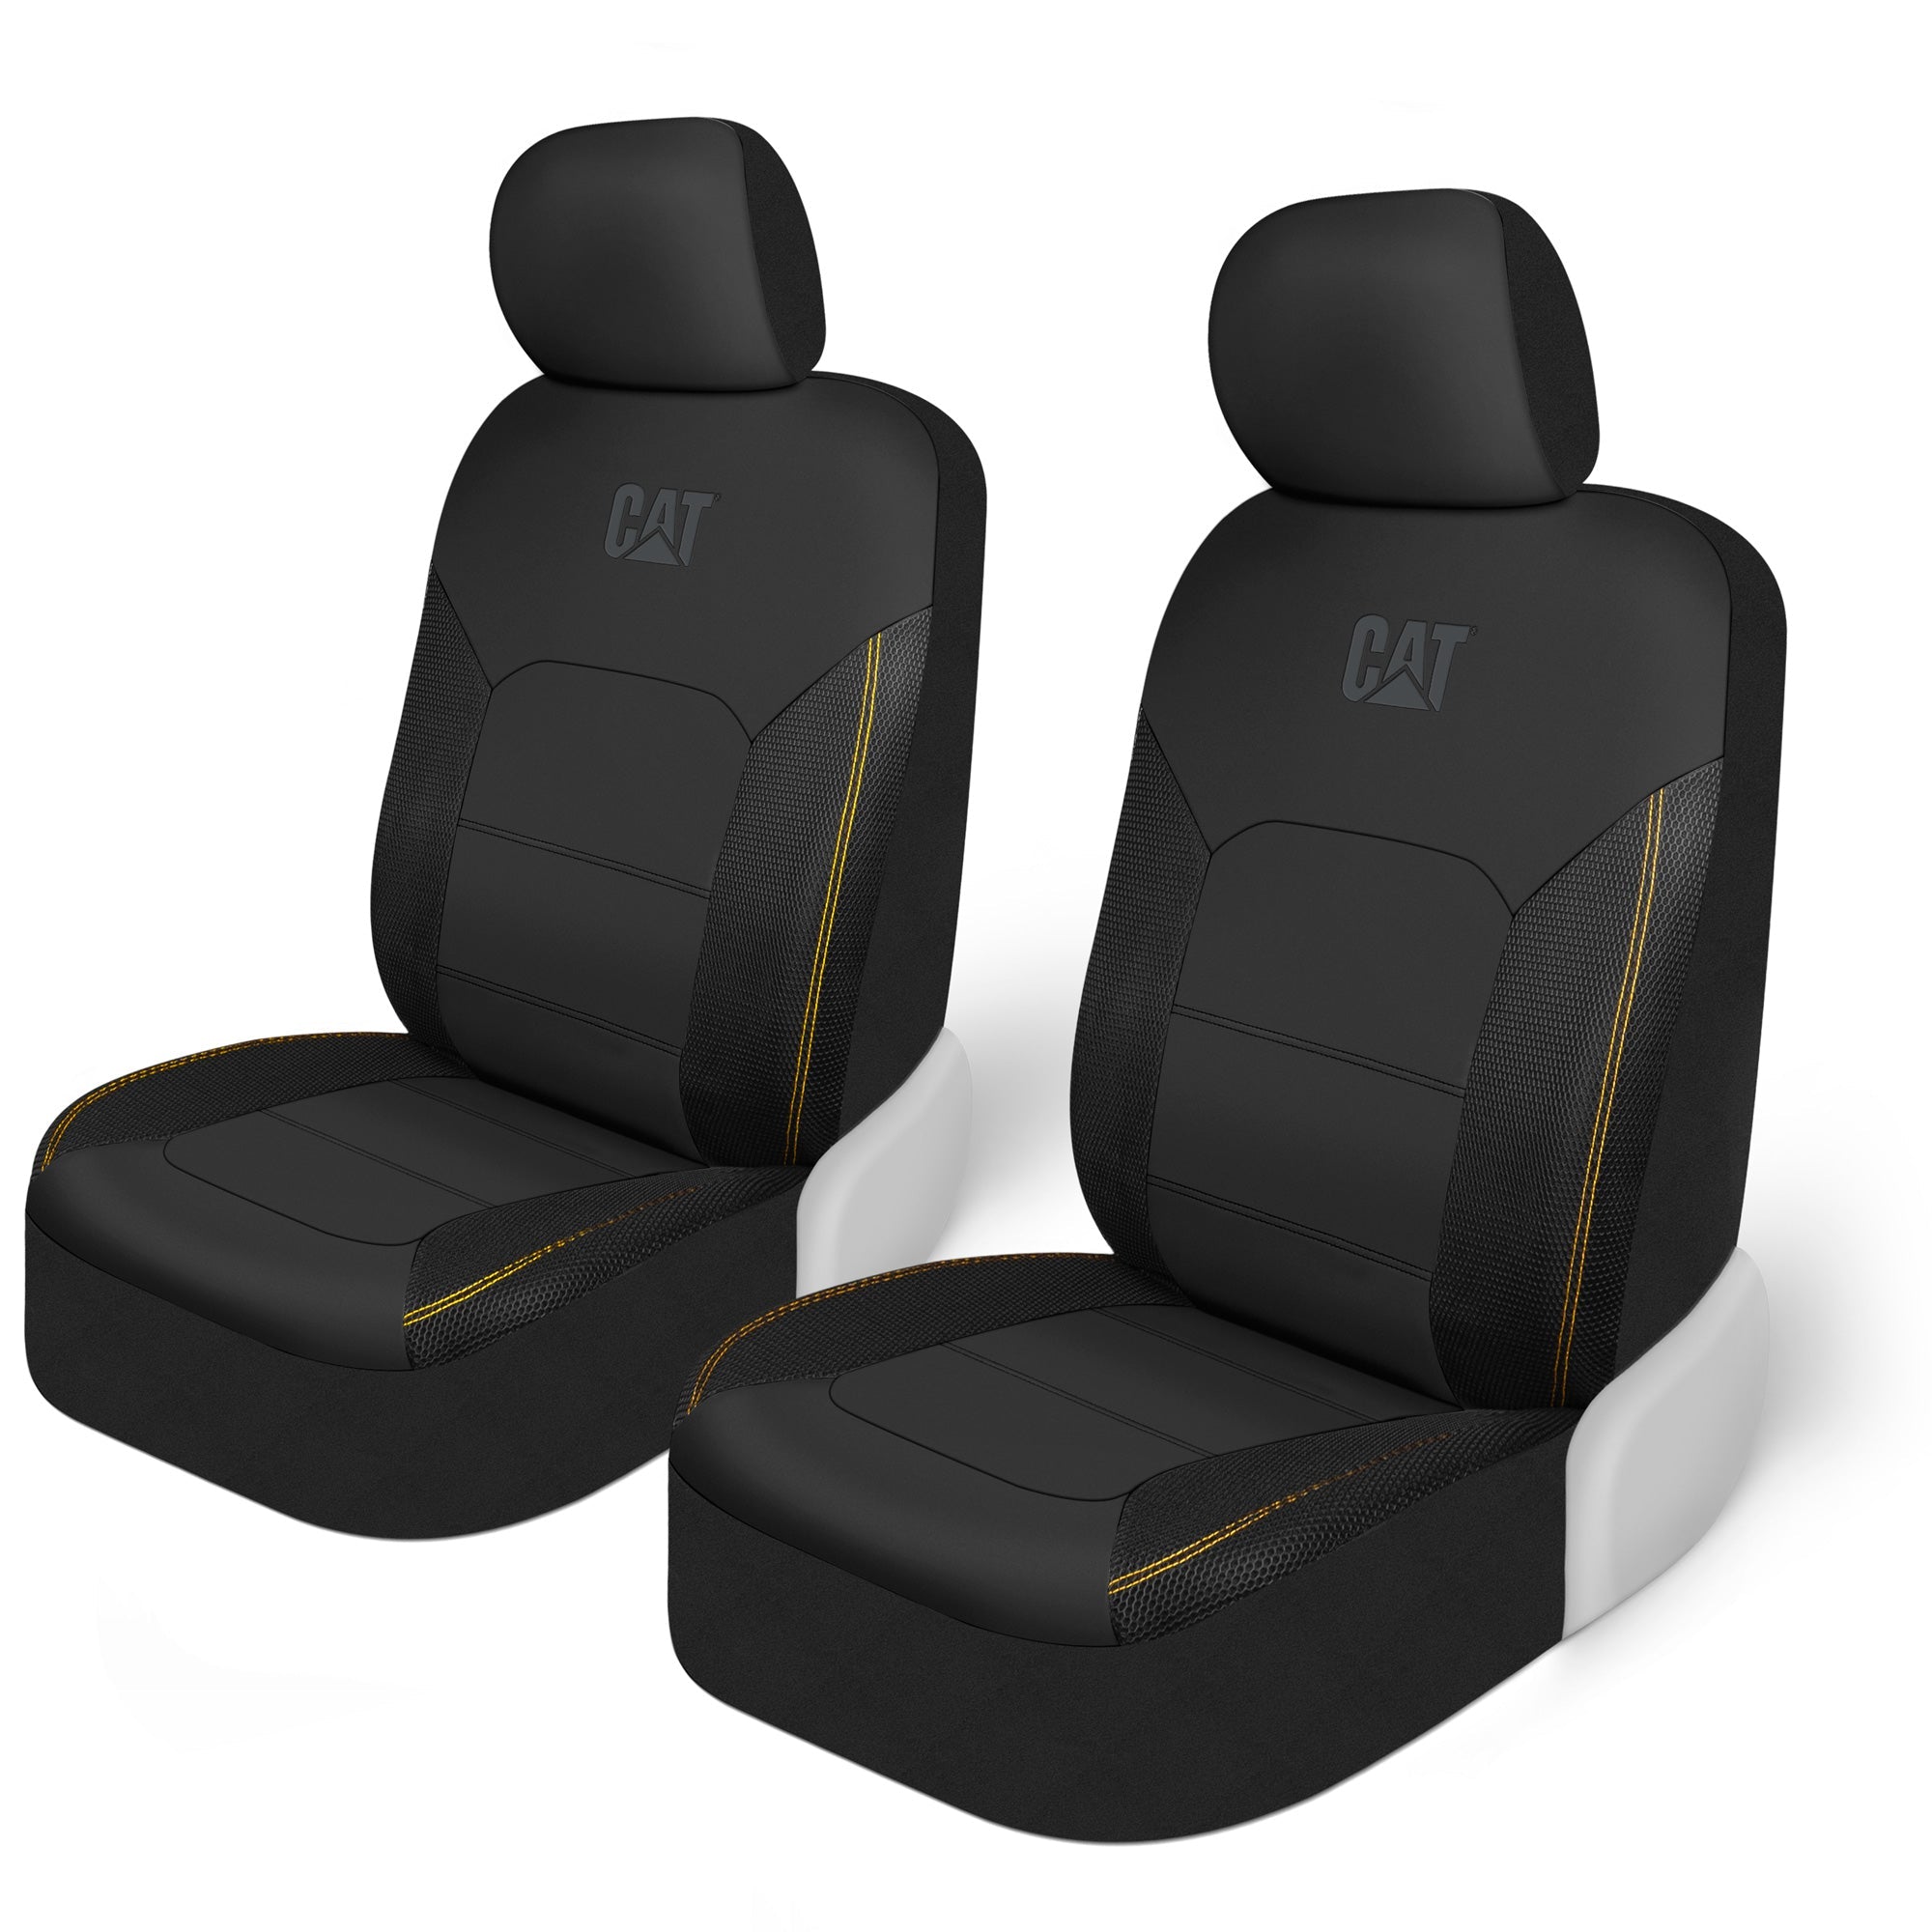 Cat FlexHybrid Black Car Seat Covers PU + Mesh Breathable Heavy Duty PU Leather & 3D Mesh 2-Piece Automotive Protectors - Black